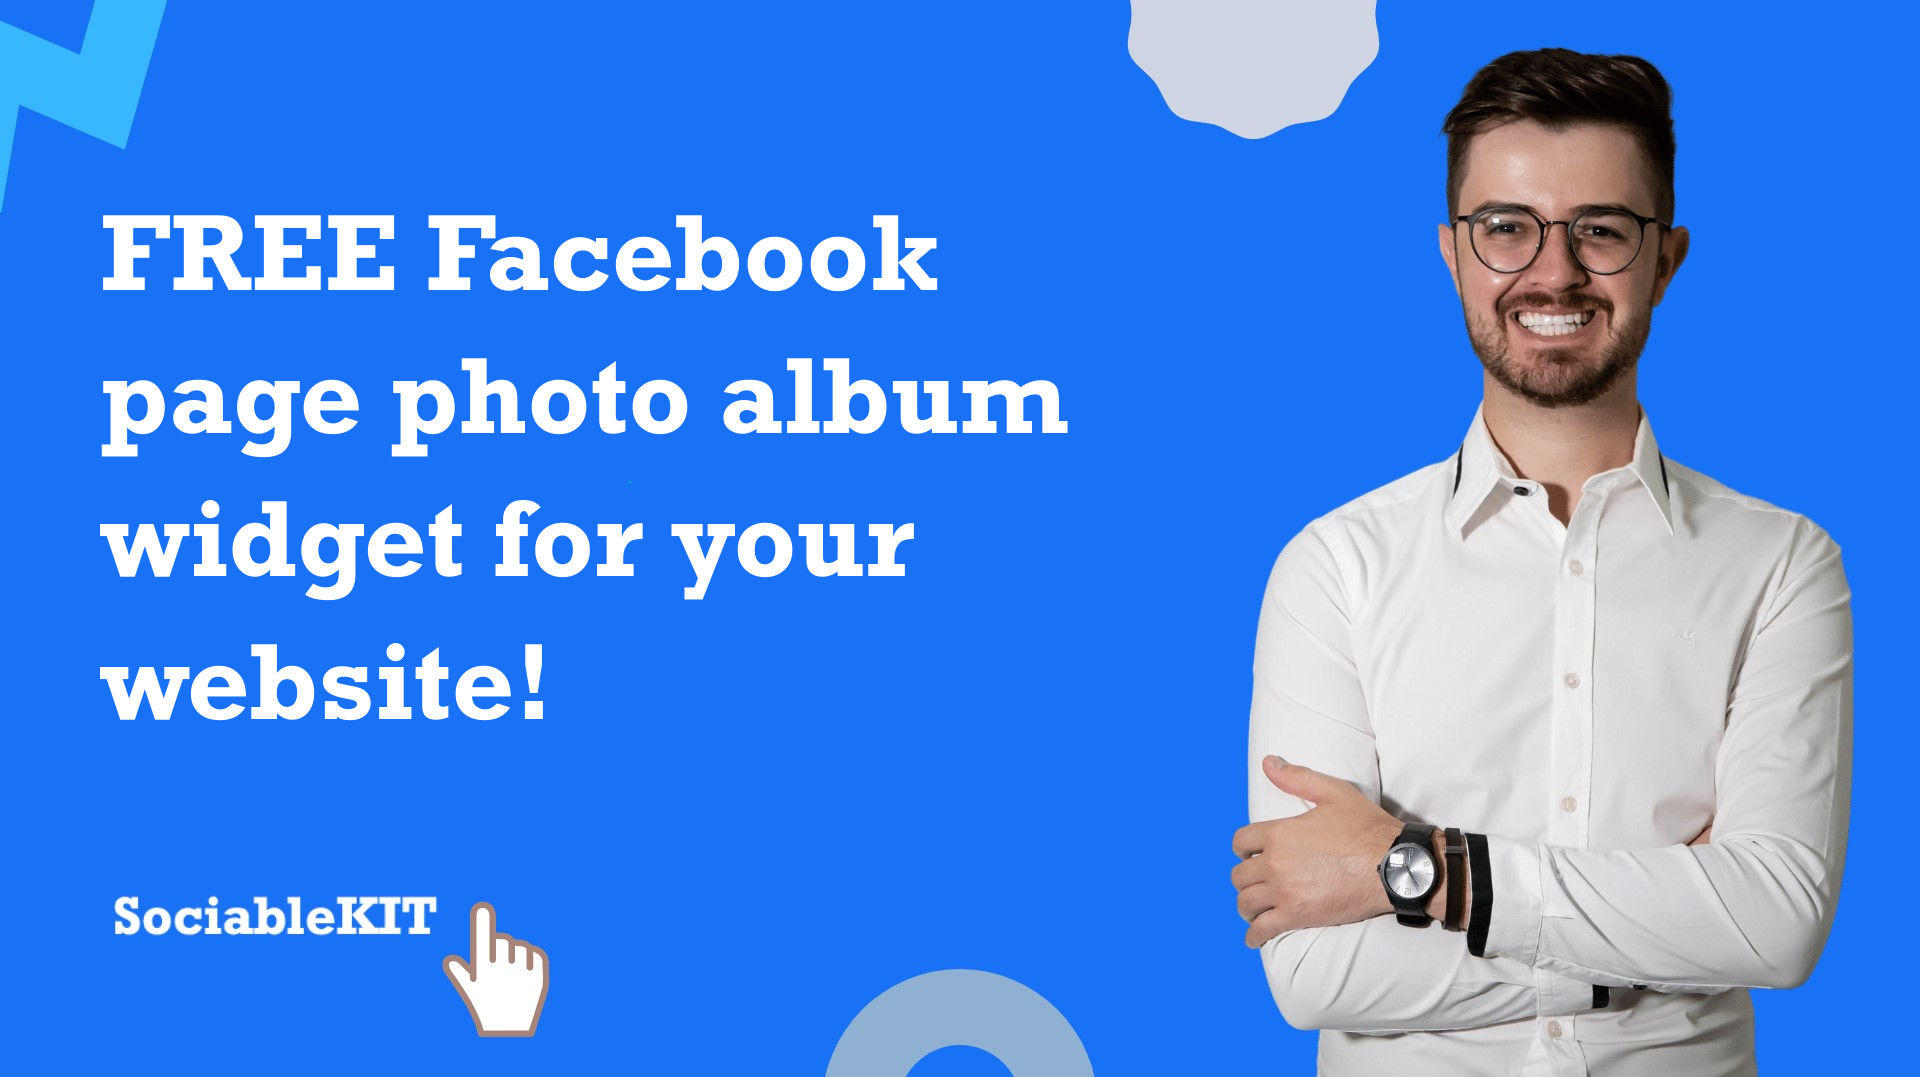 Free Facebook page photo album (one photo album) widget for your website